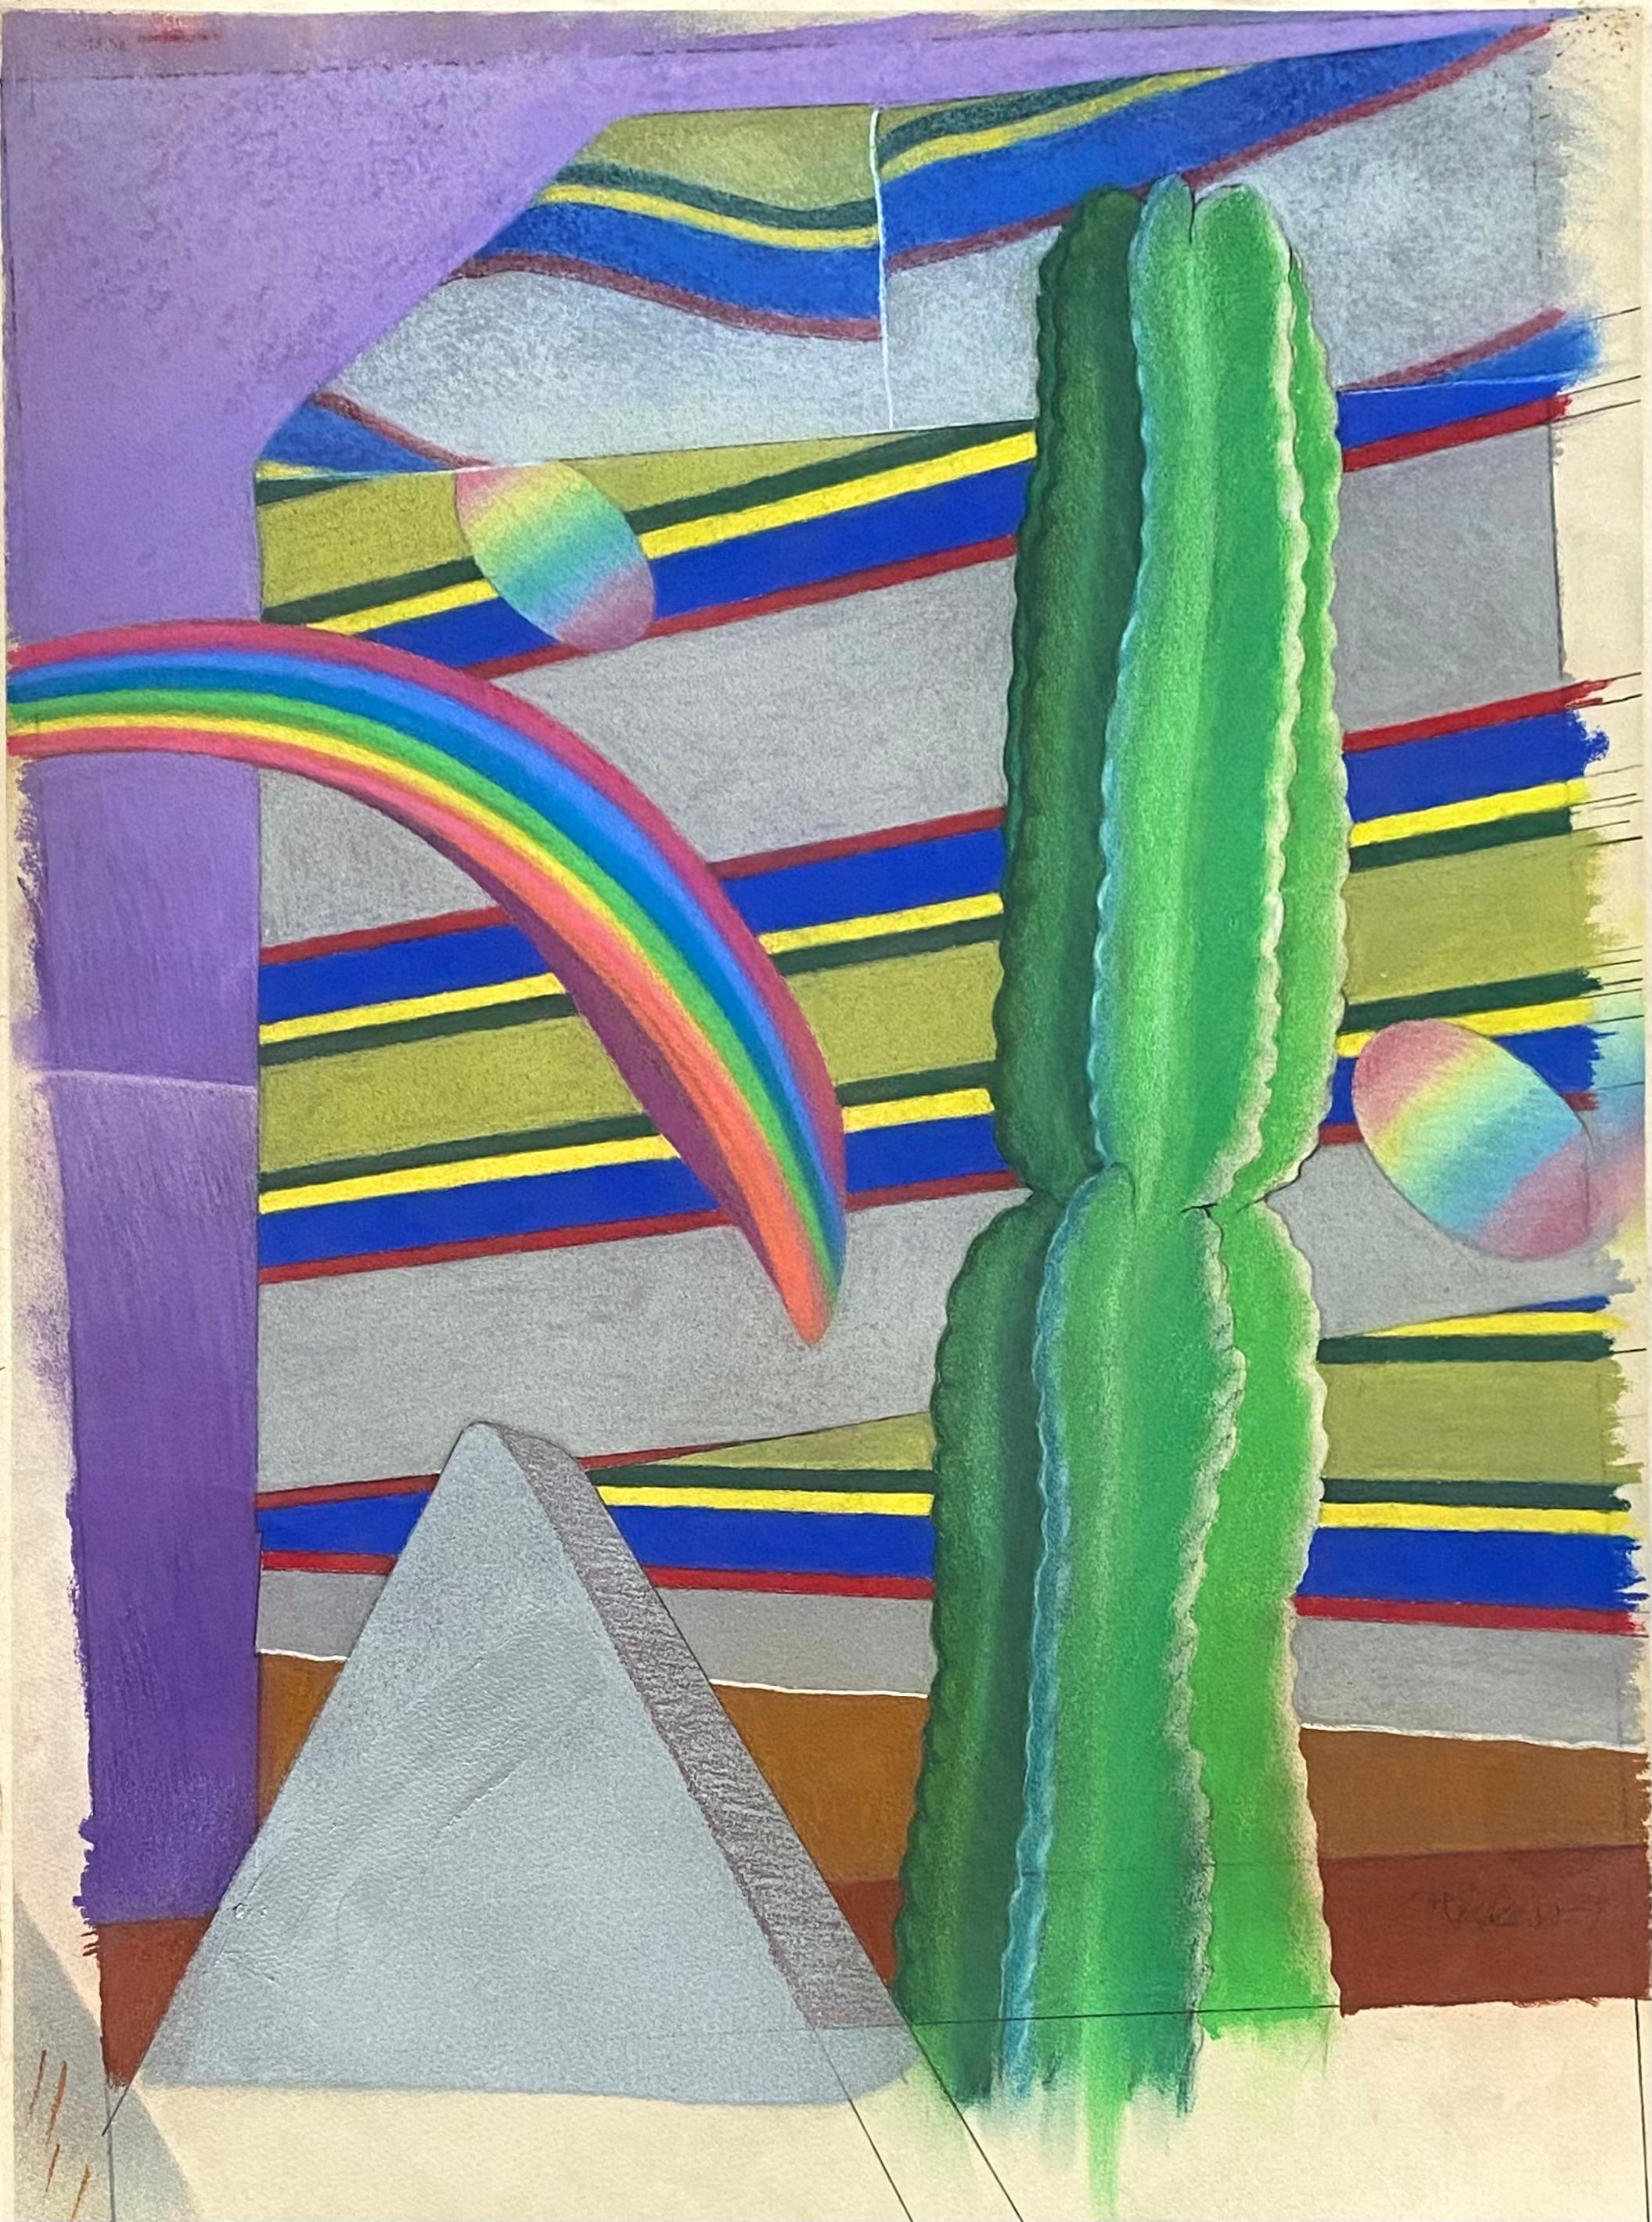 Tom Rickers Landscape Art - “Cactus, Pyramid, and Rainbow”